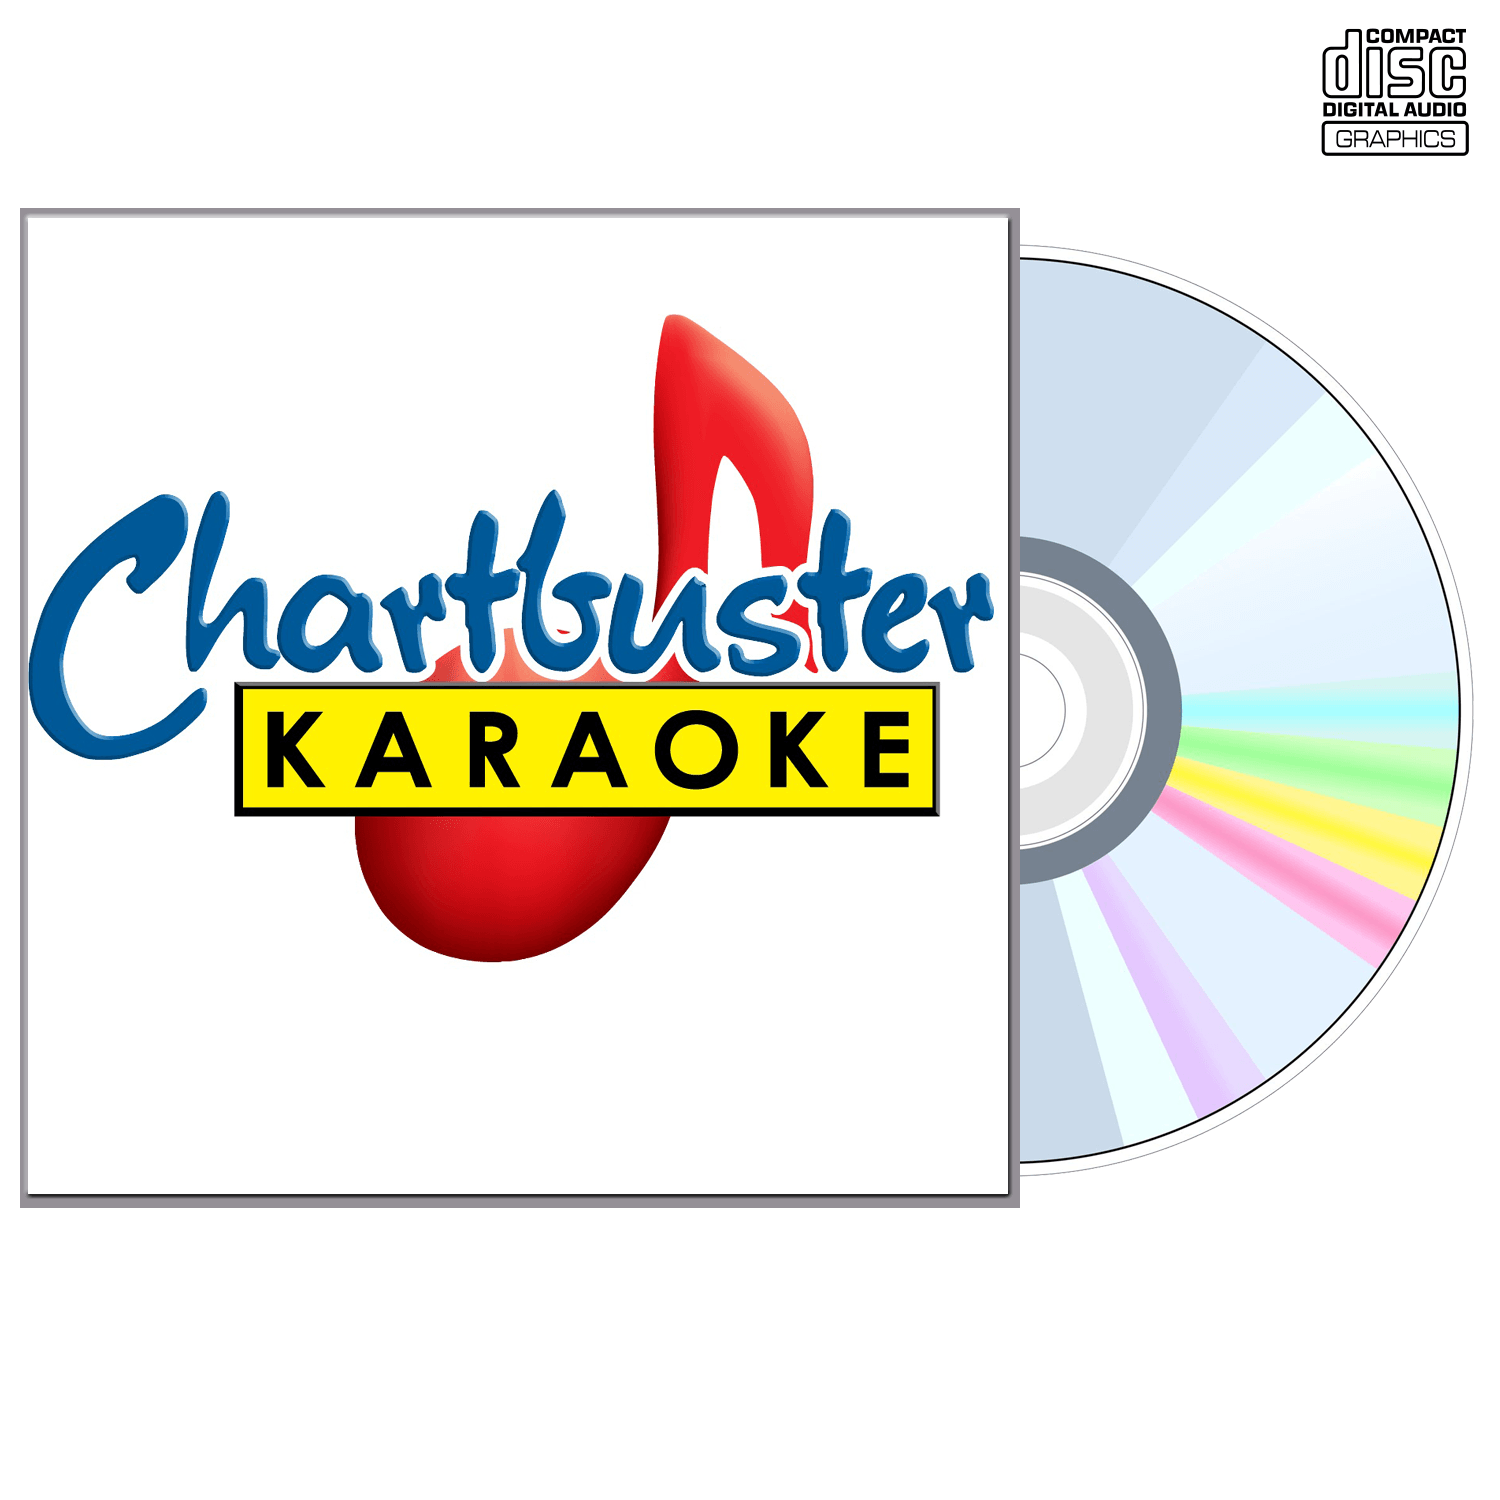 Tim Rushlow - CD+G - Chartbuster Karaoke - Karaoke Home Entertainment